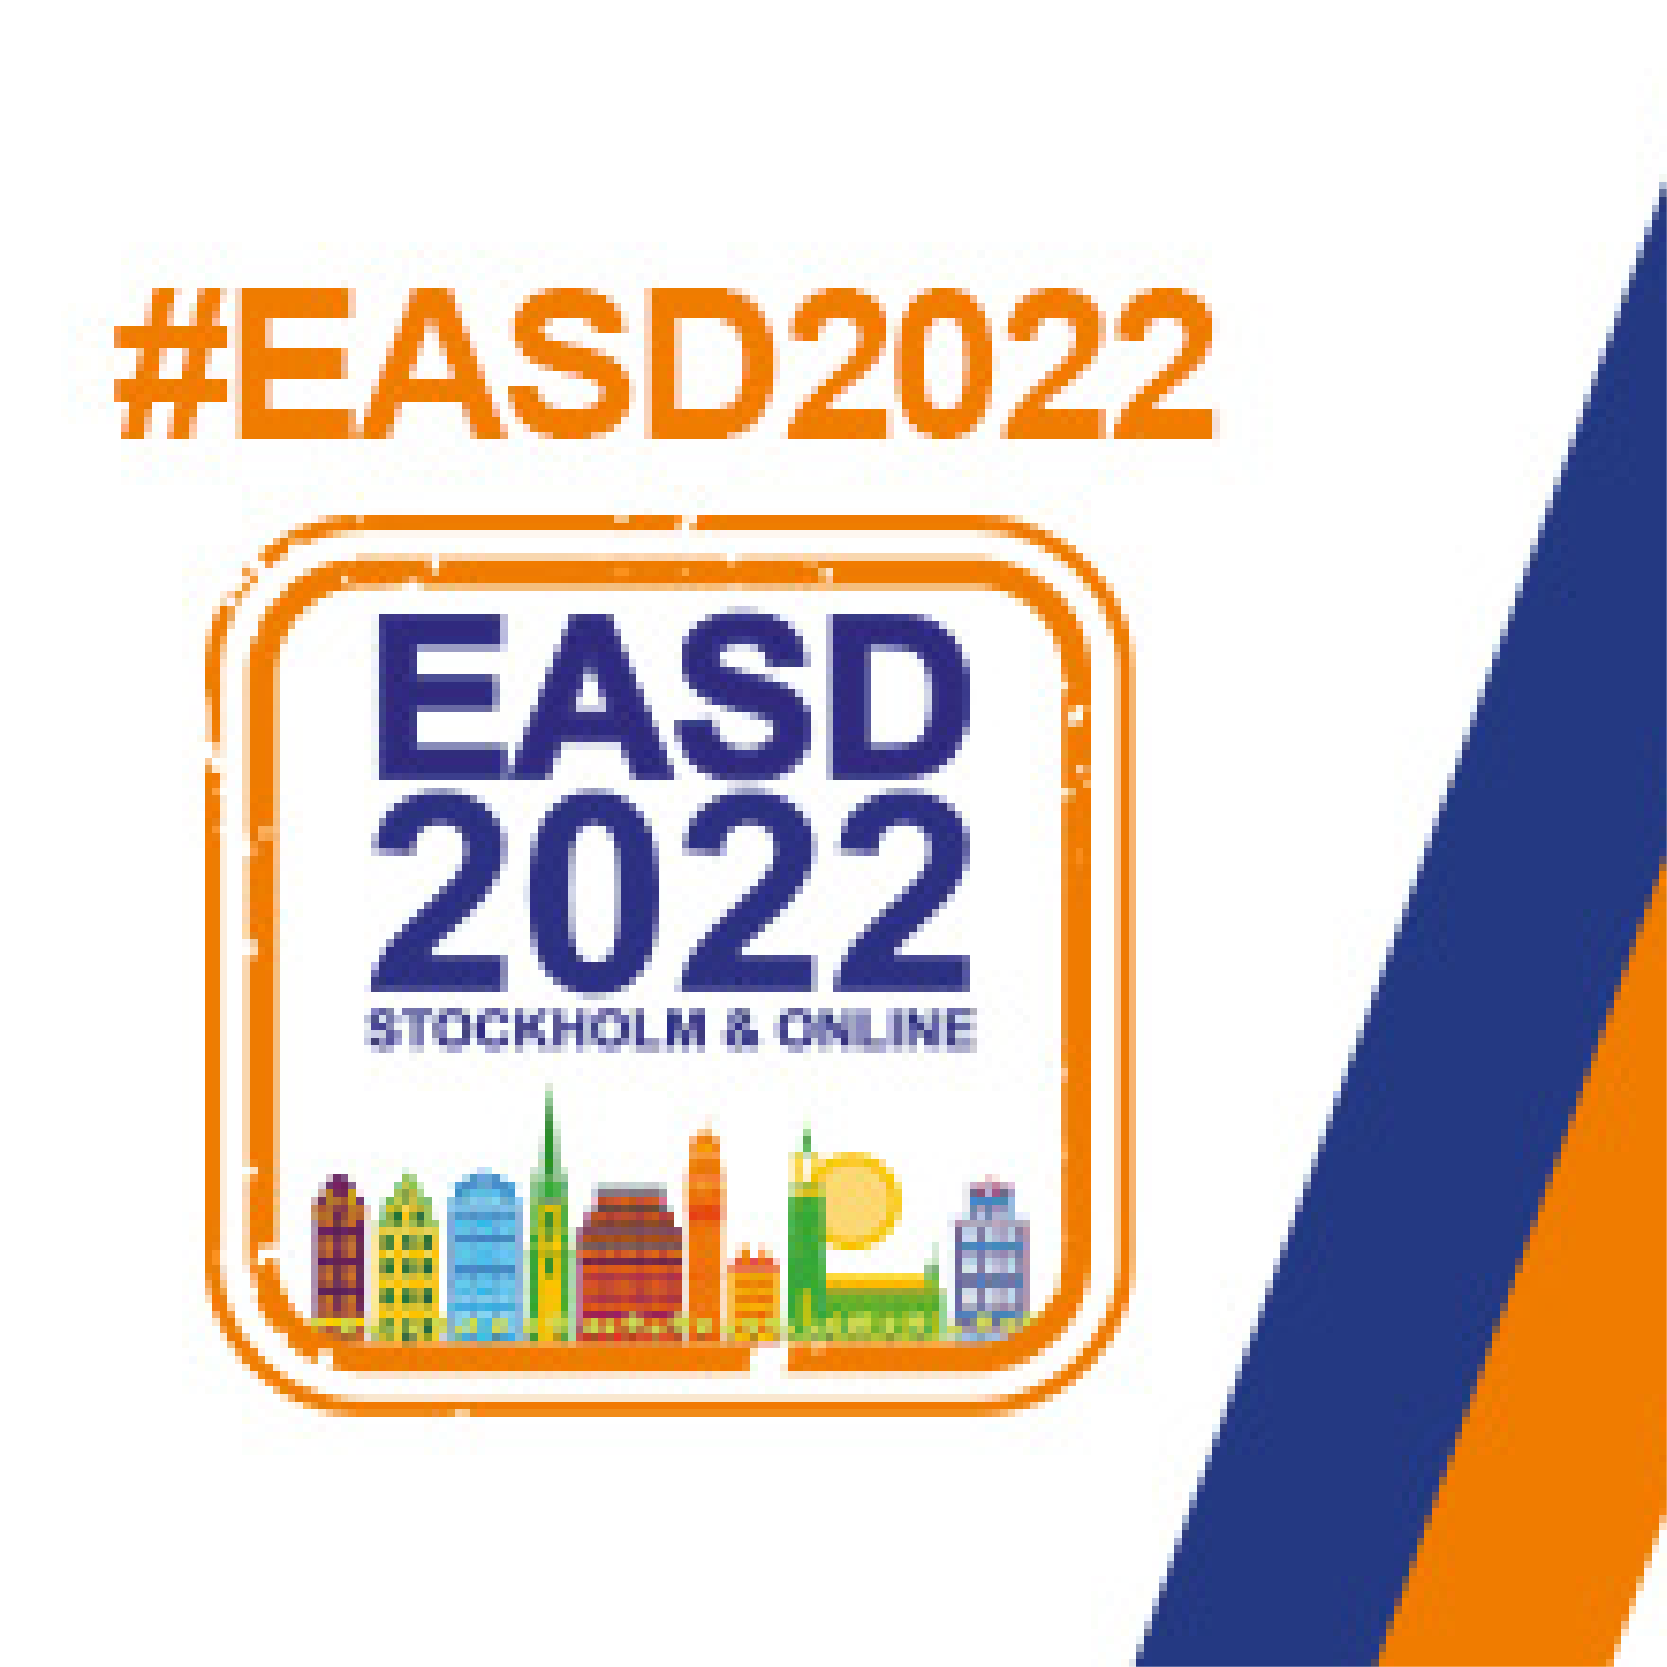 European Association for the Study of Diabetes – EASD Annual Meeting 2022